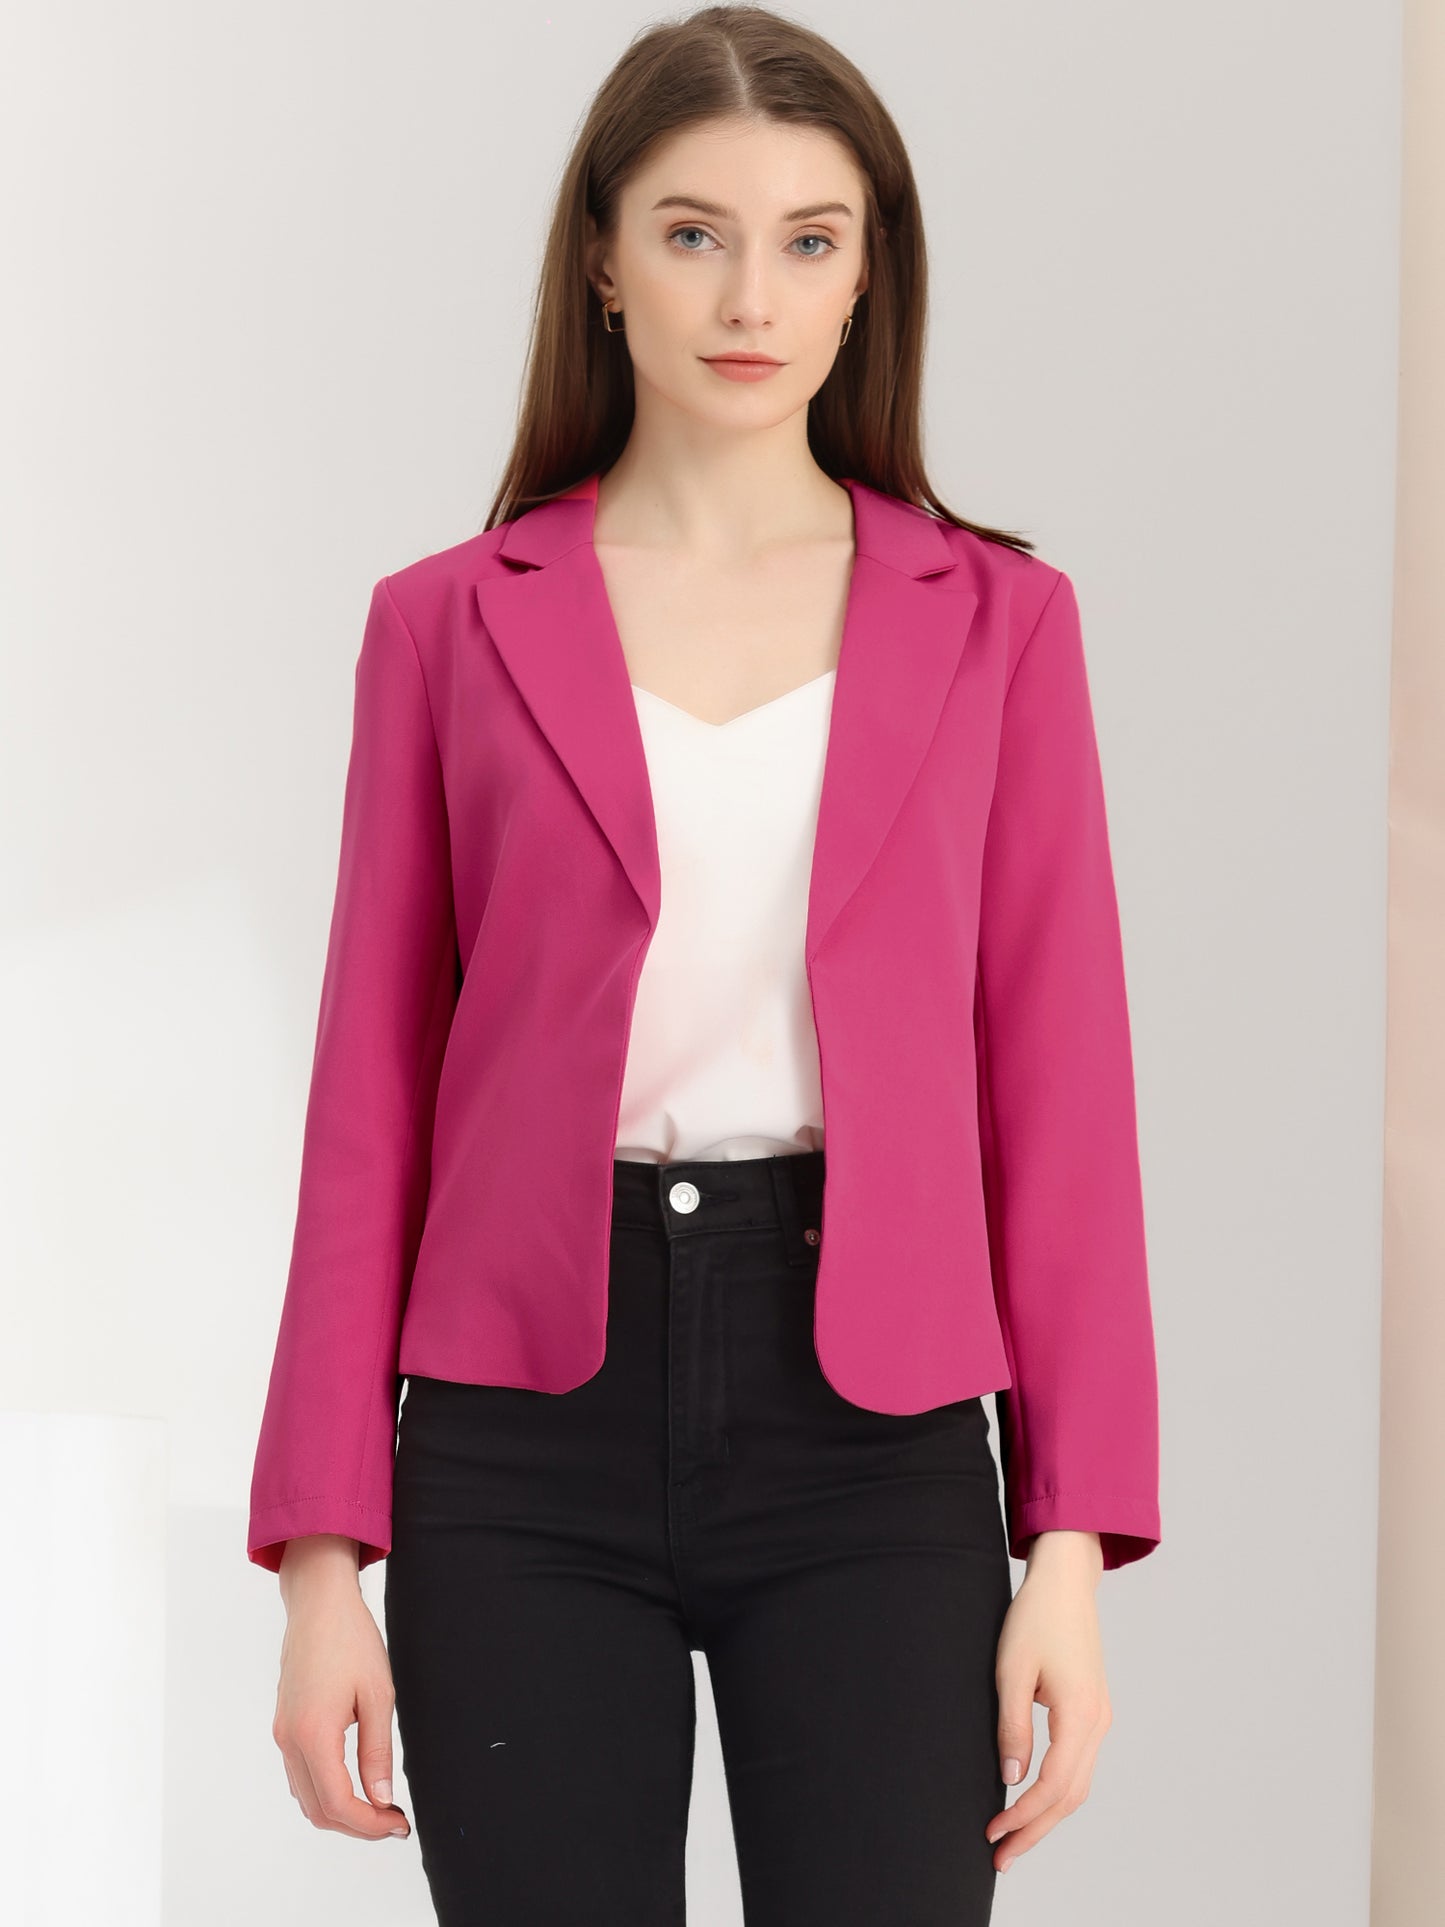 Allegra K Open Front Business Casual Workwear Crop Suit Blazer Jacket Hot Pink-Solid